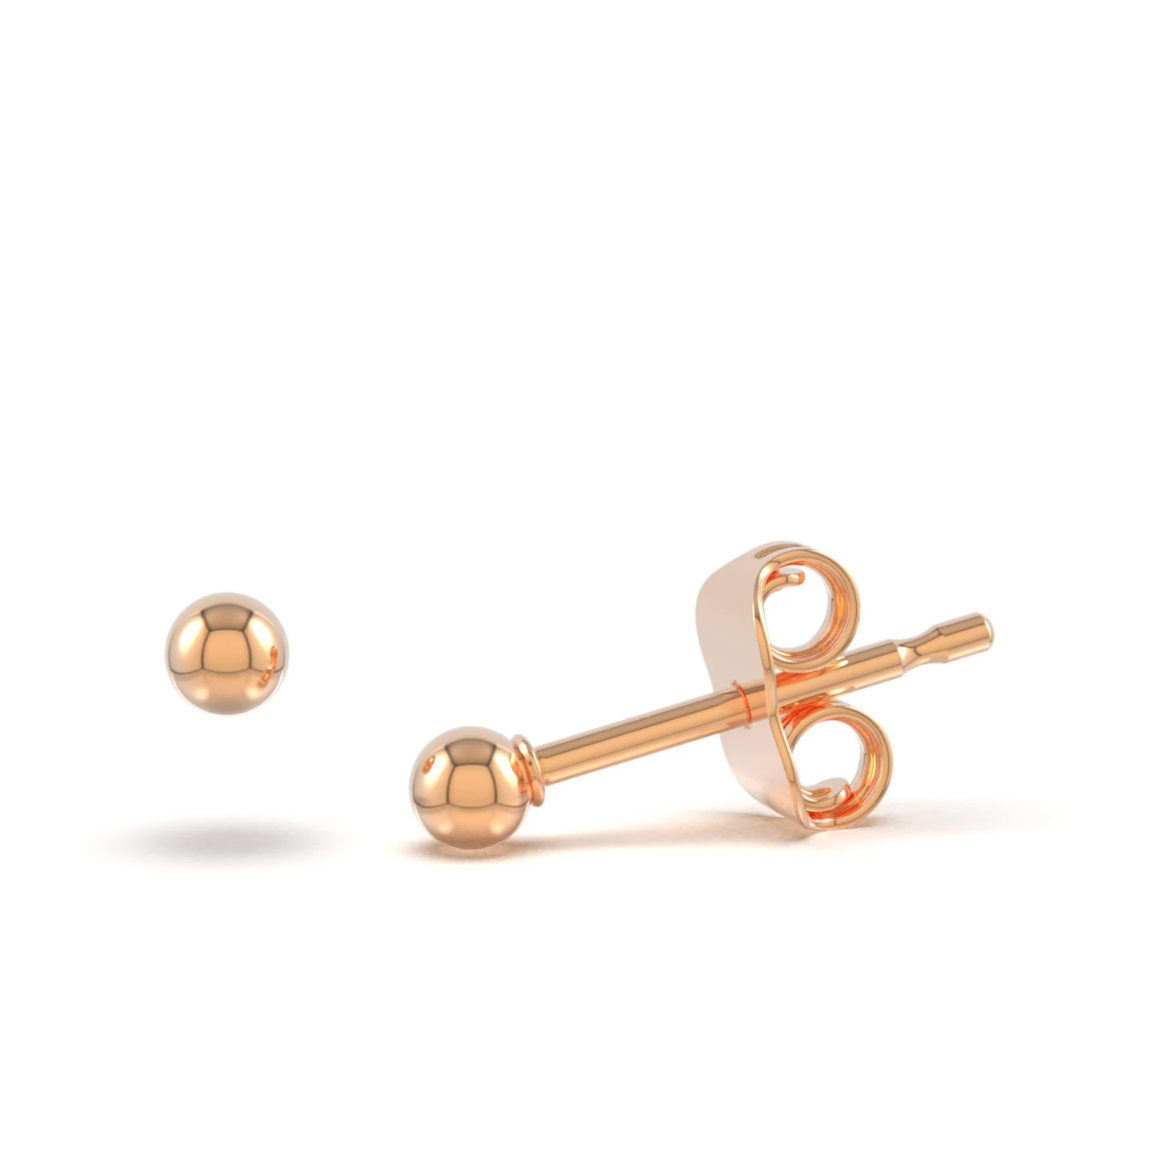 Minimalist 14K Solid Rose Gold Stud Earrings